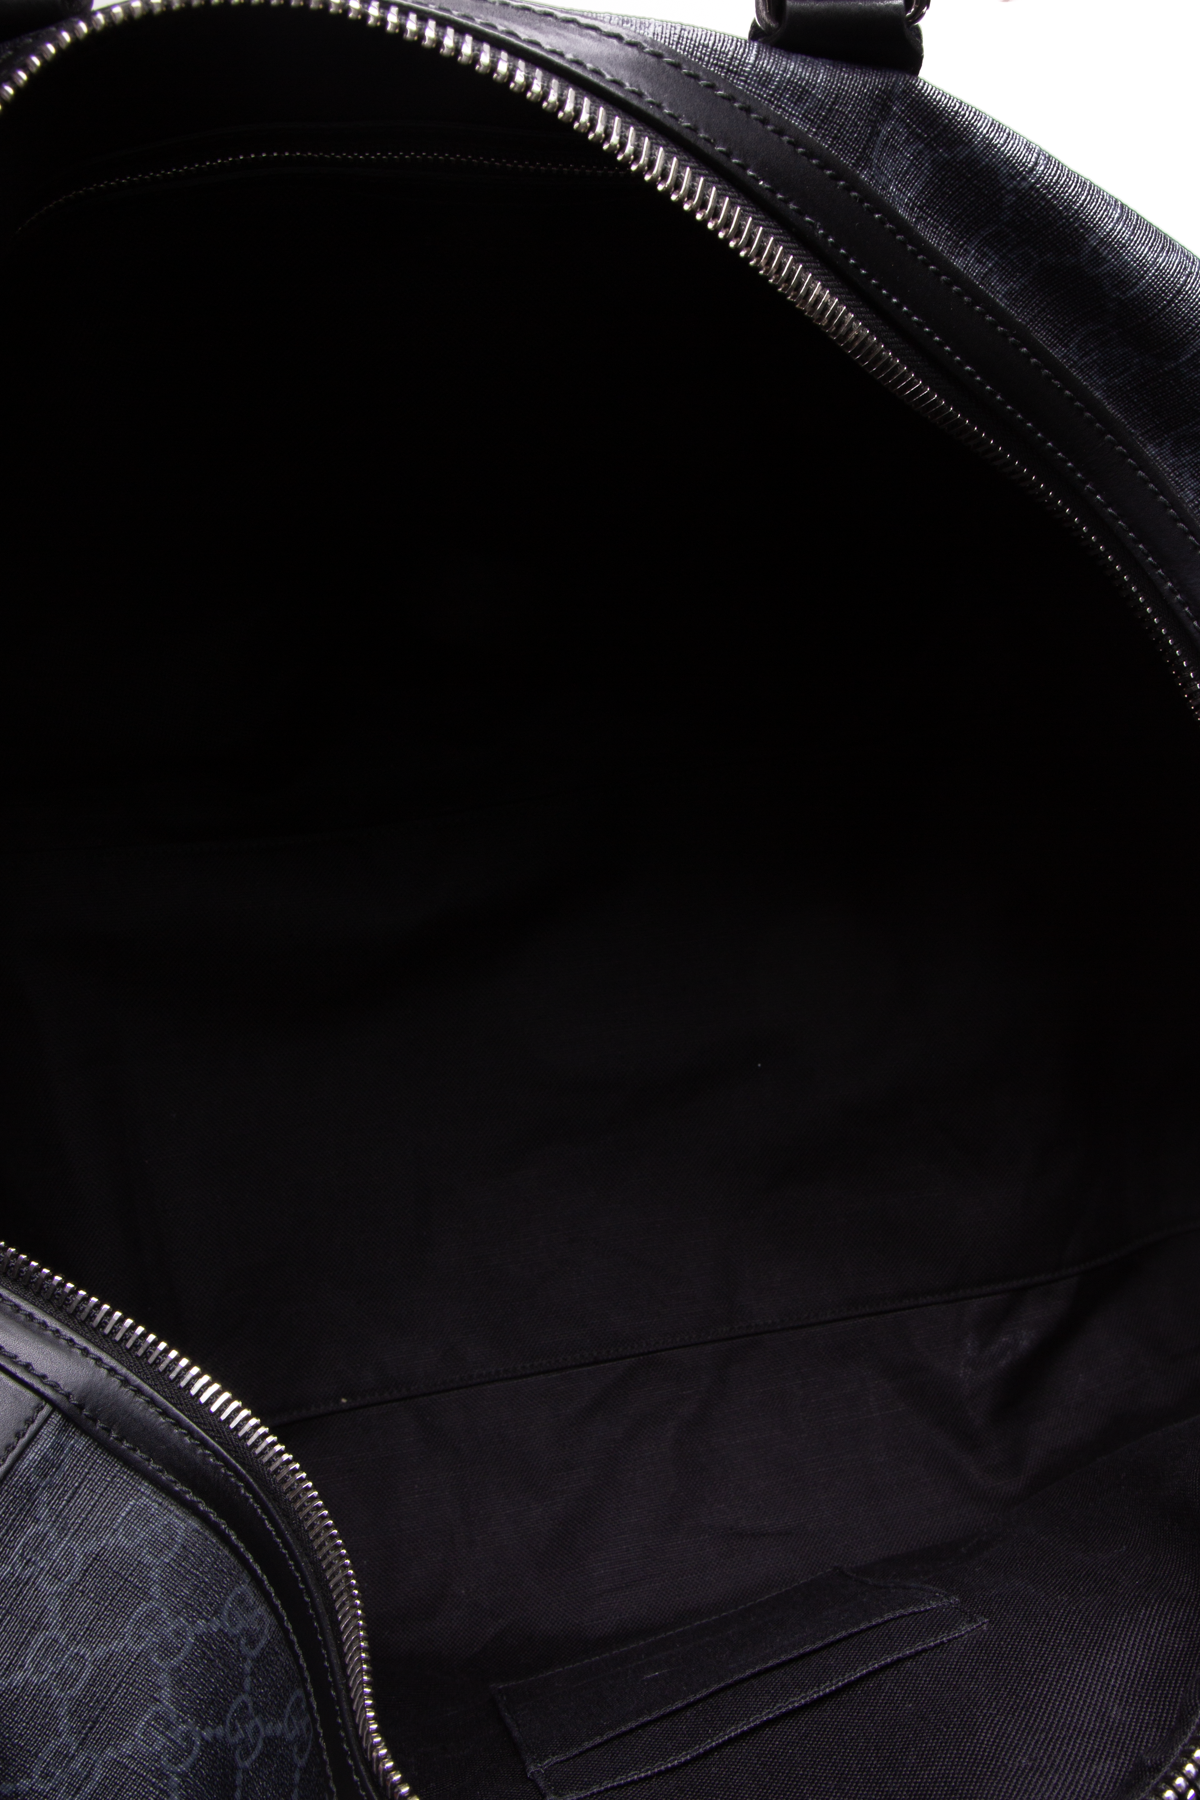 GUCCI - GG Black carry-on duffle bag (Louis Vuitton Keepall